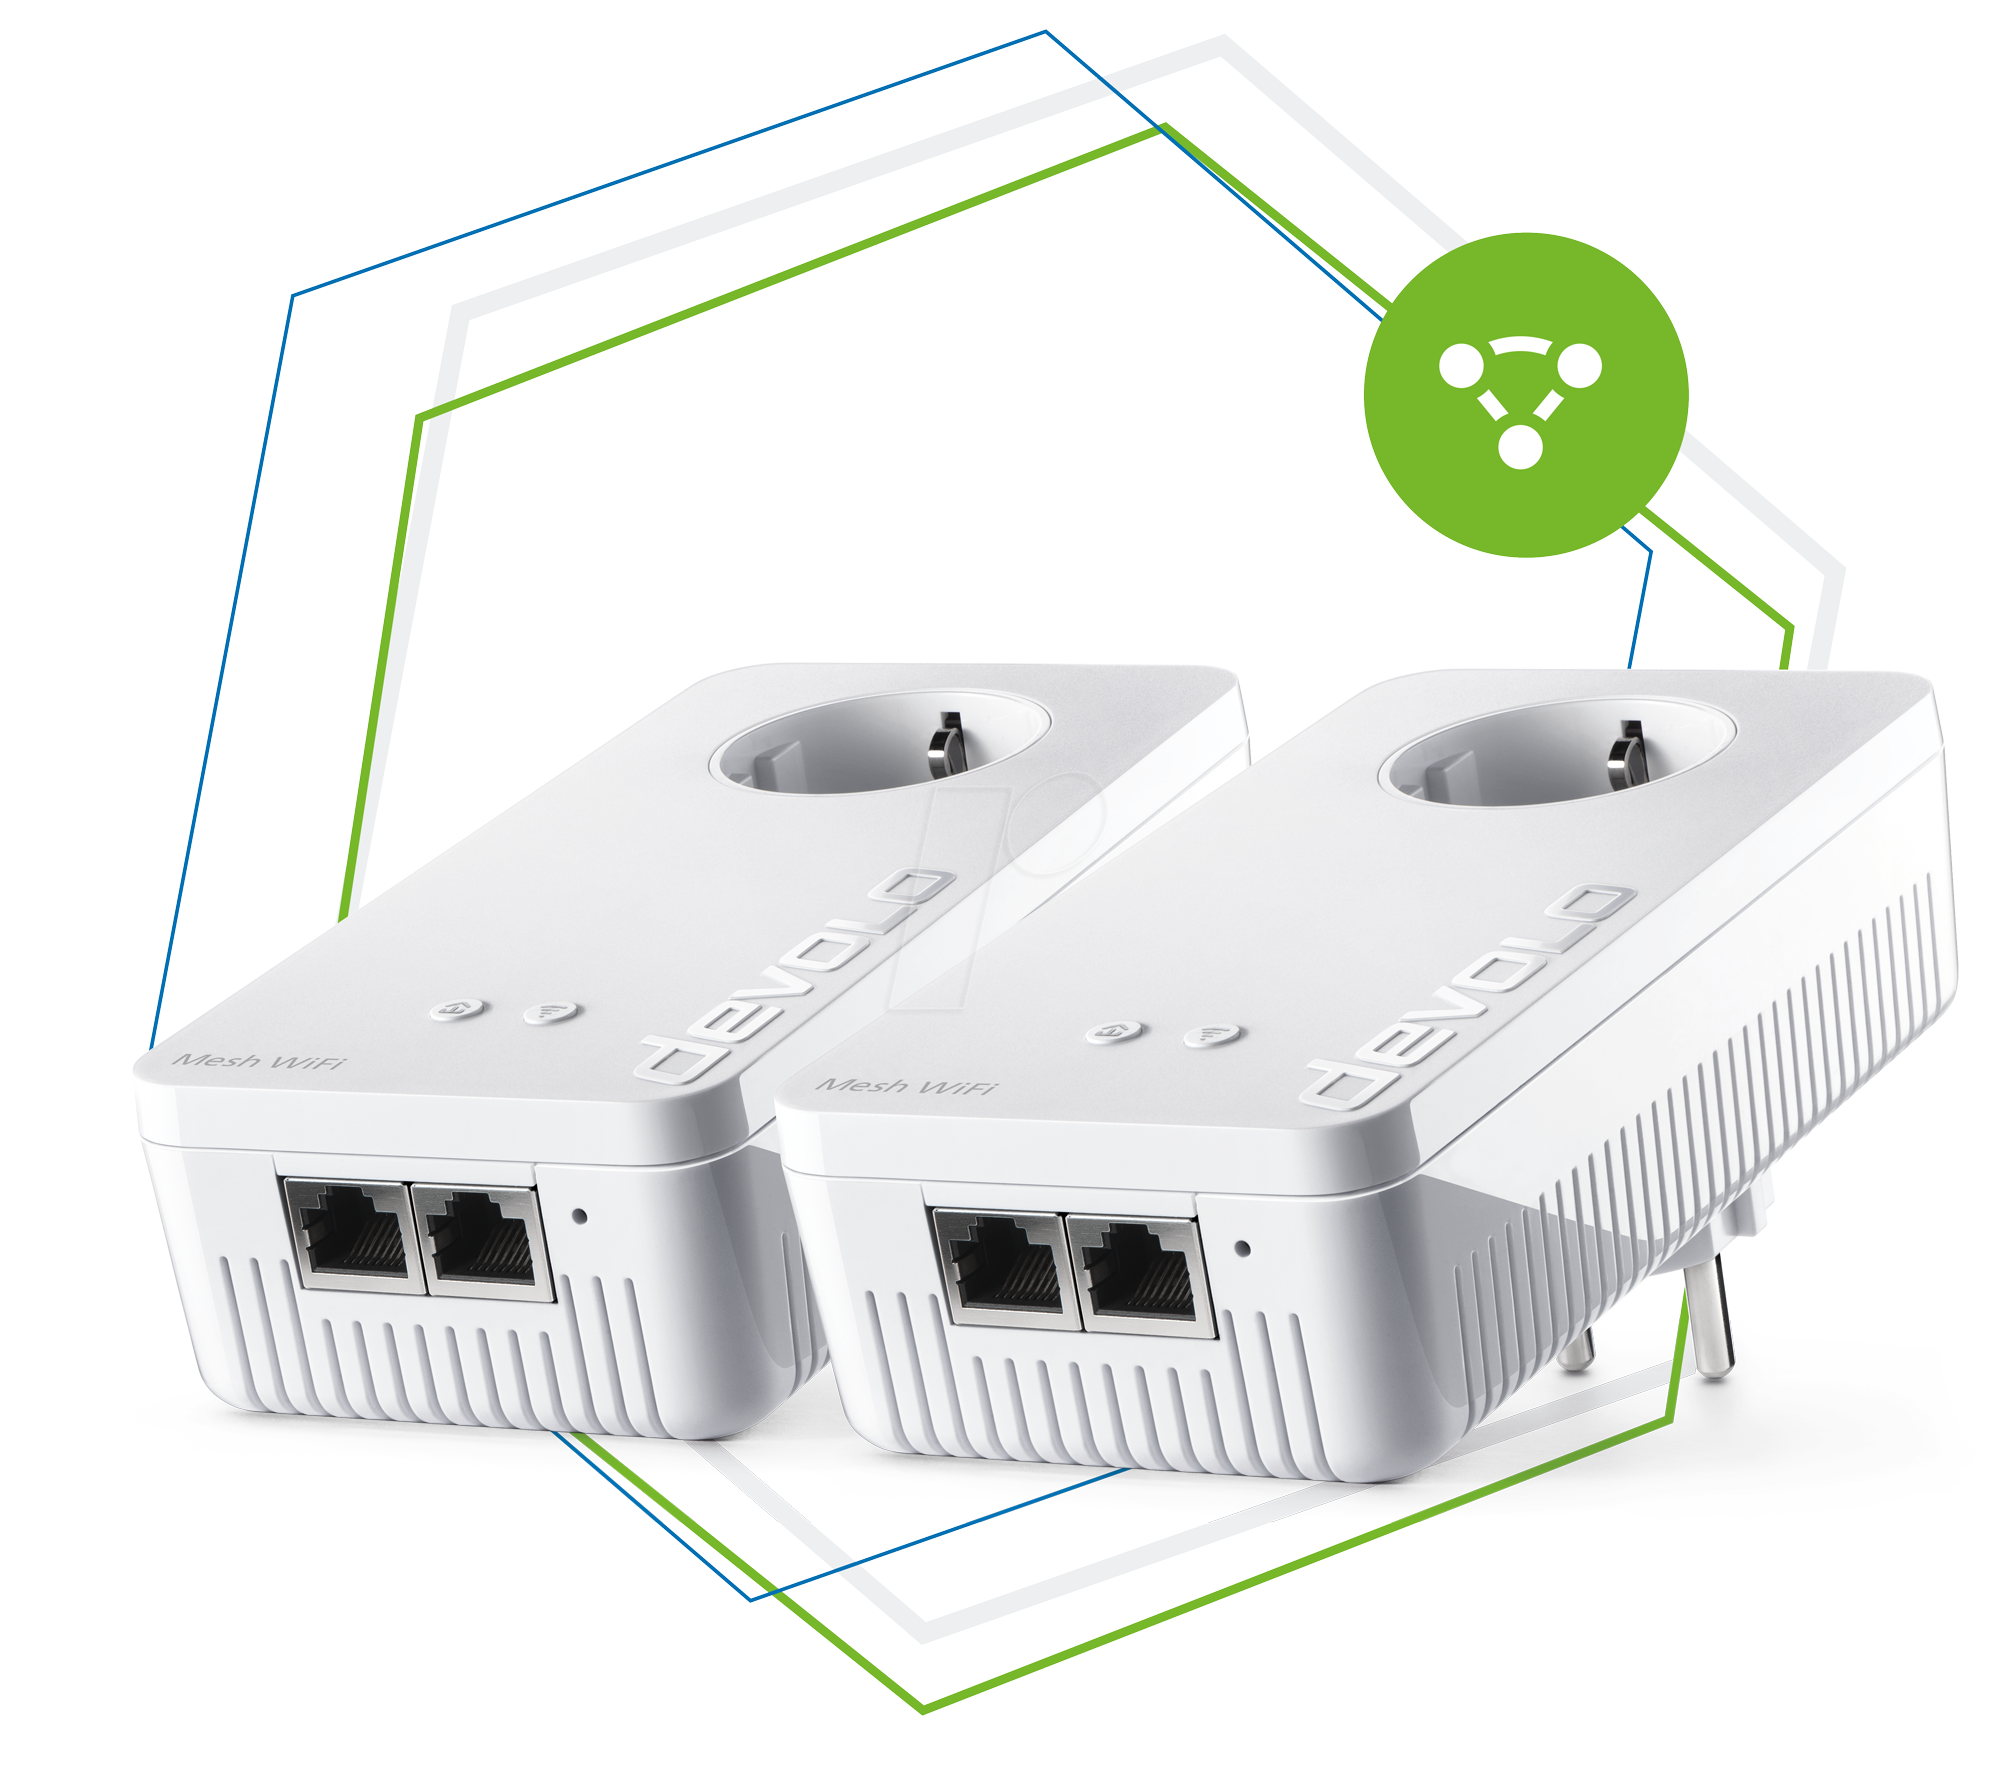 DEVOLO 8755: Powerline Kit Mesh WiFi 2 (2 devices) at reichelt elektronik